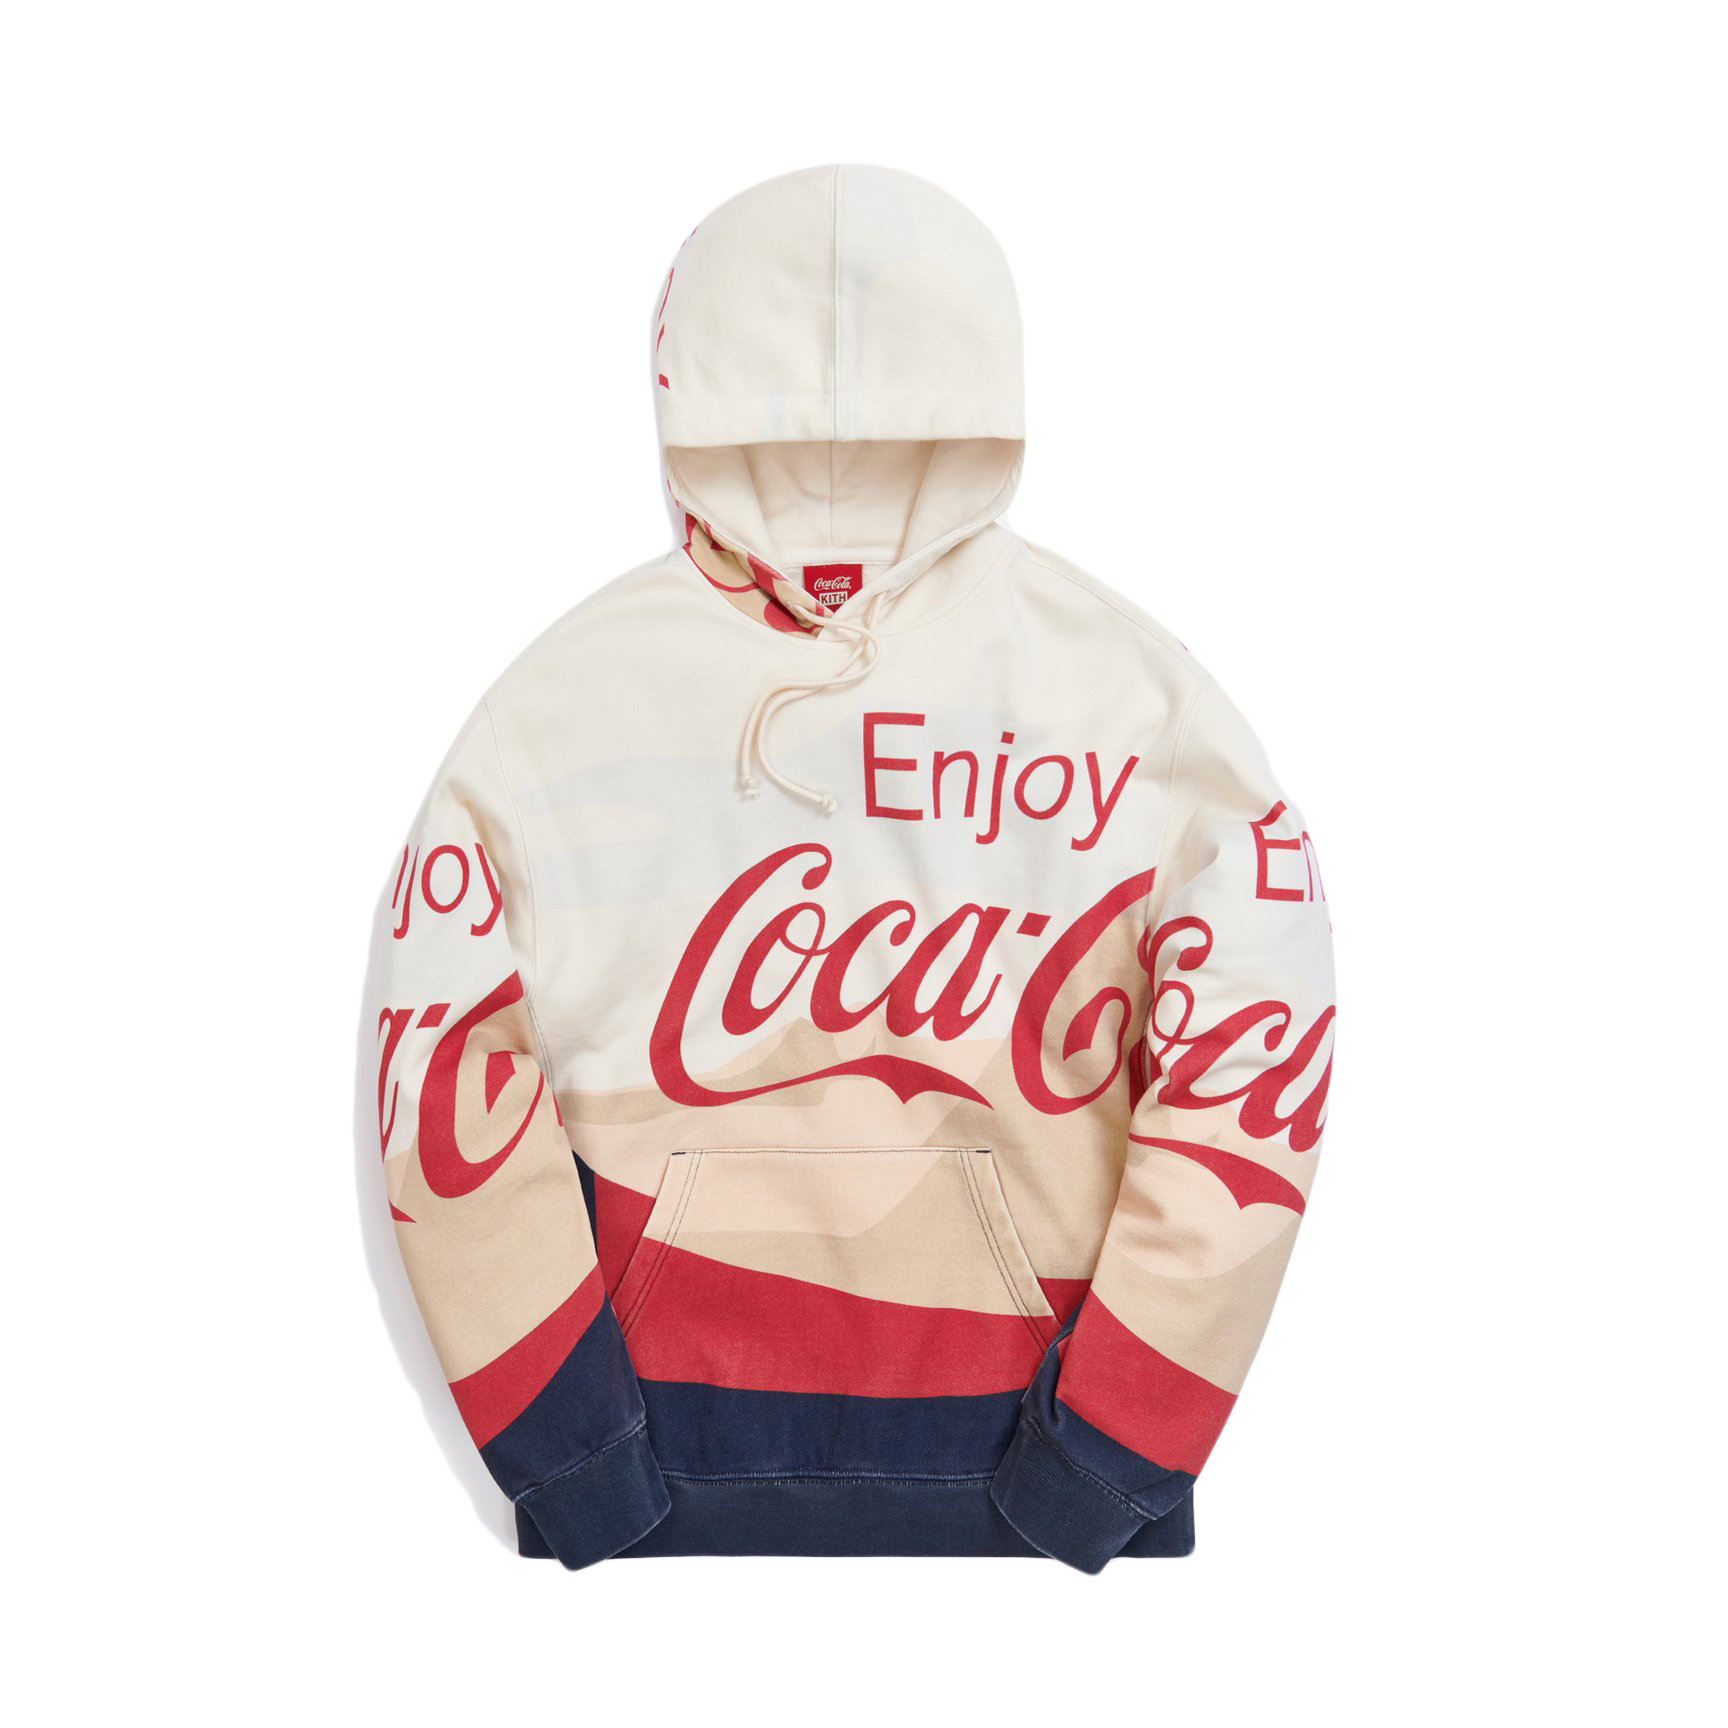 KITH × Coca Cola フーディフーディ